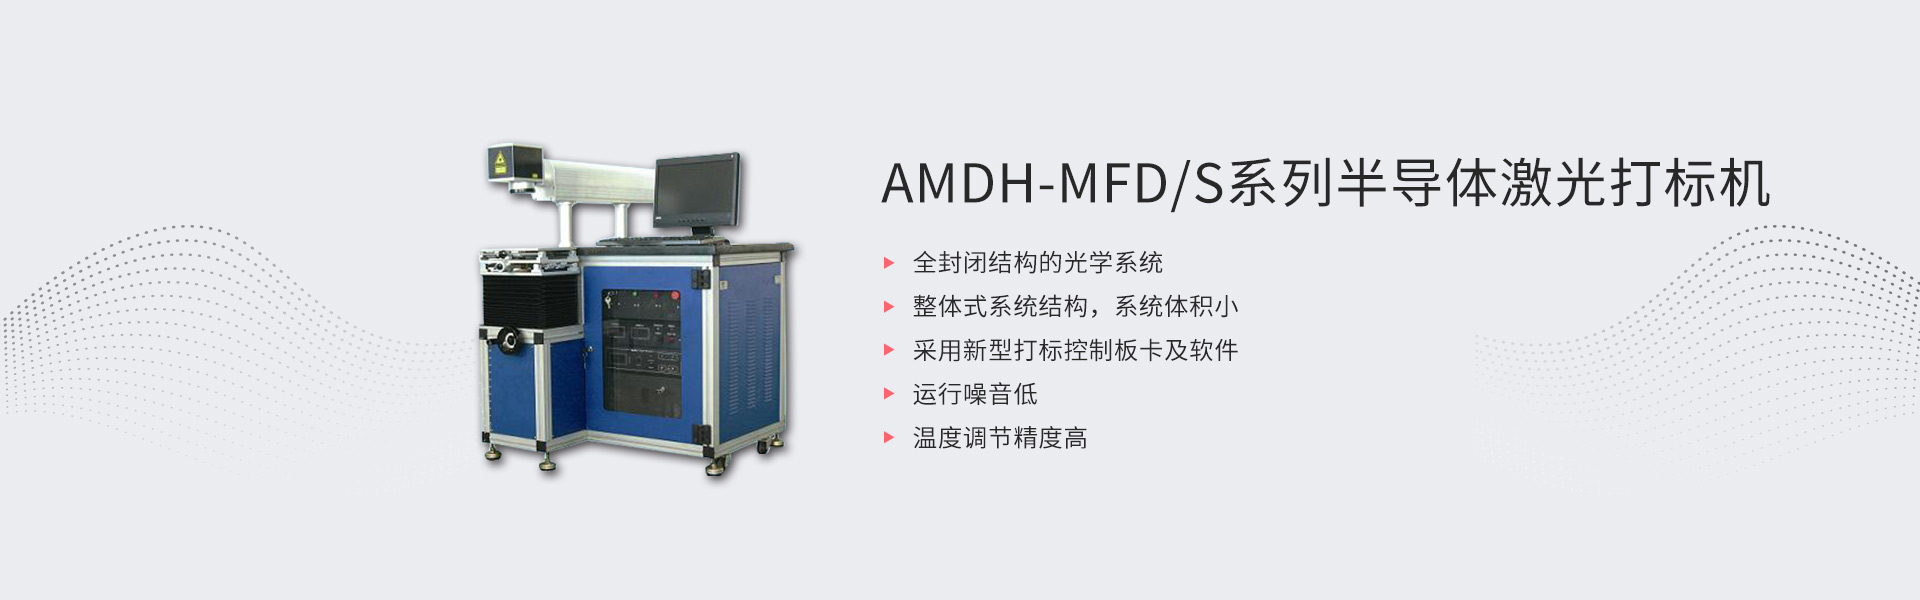 AMDH-MFD-S系列半导体激光打标机(图1)